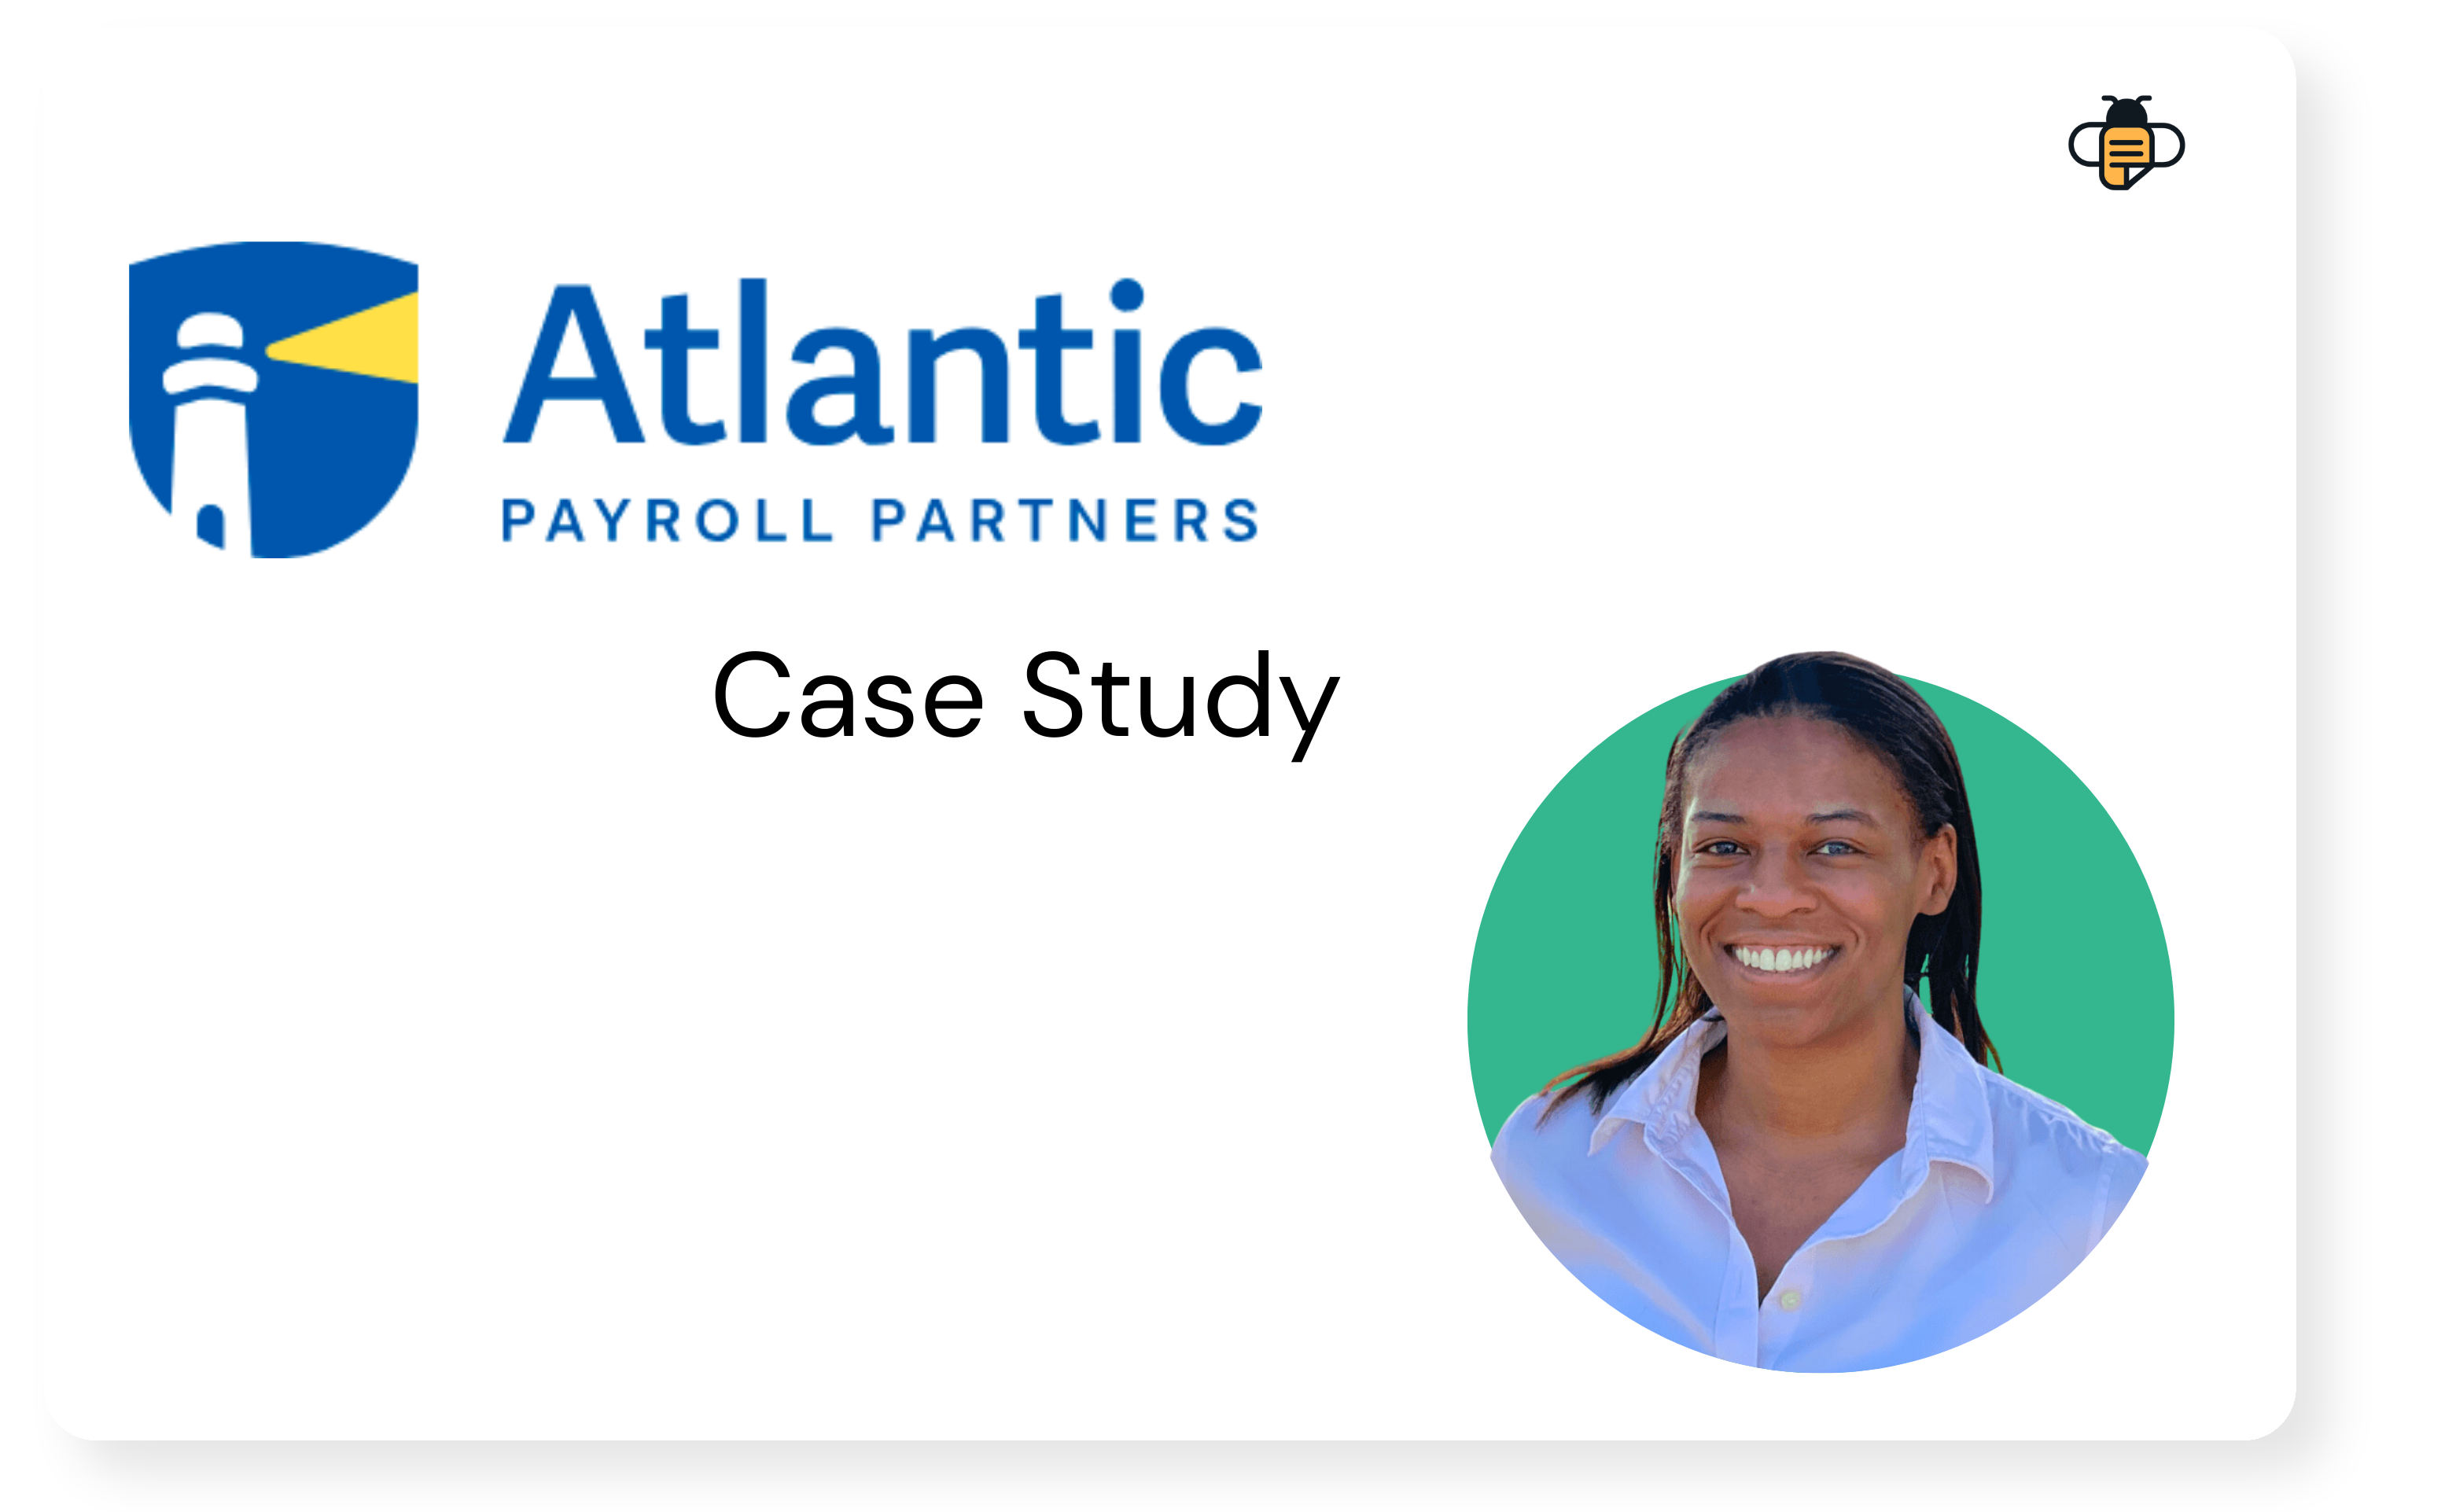 Atlantic Payroll Partners Case Study